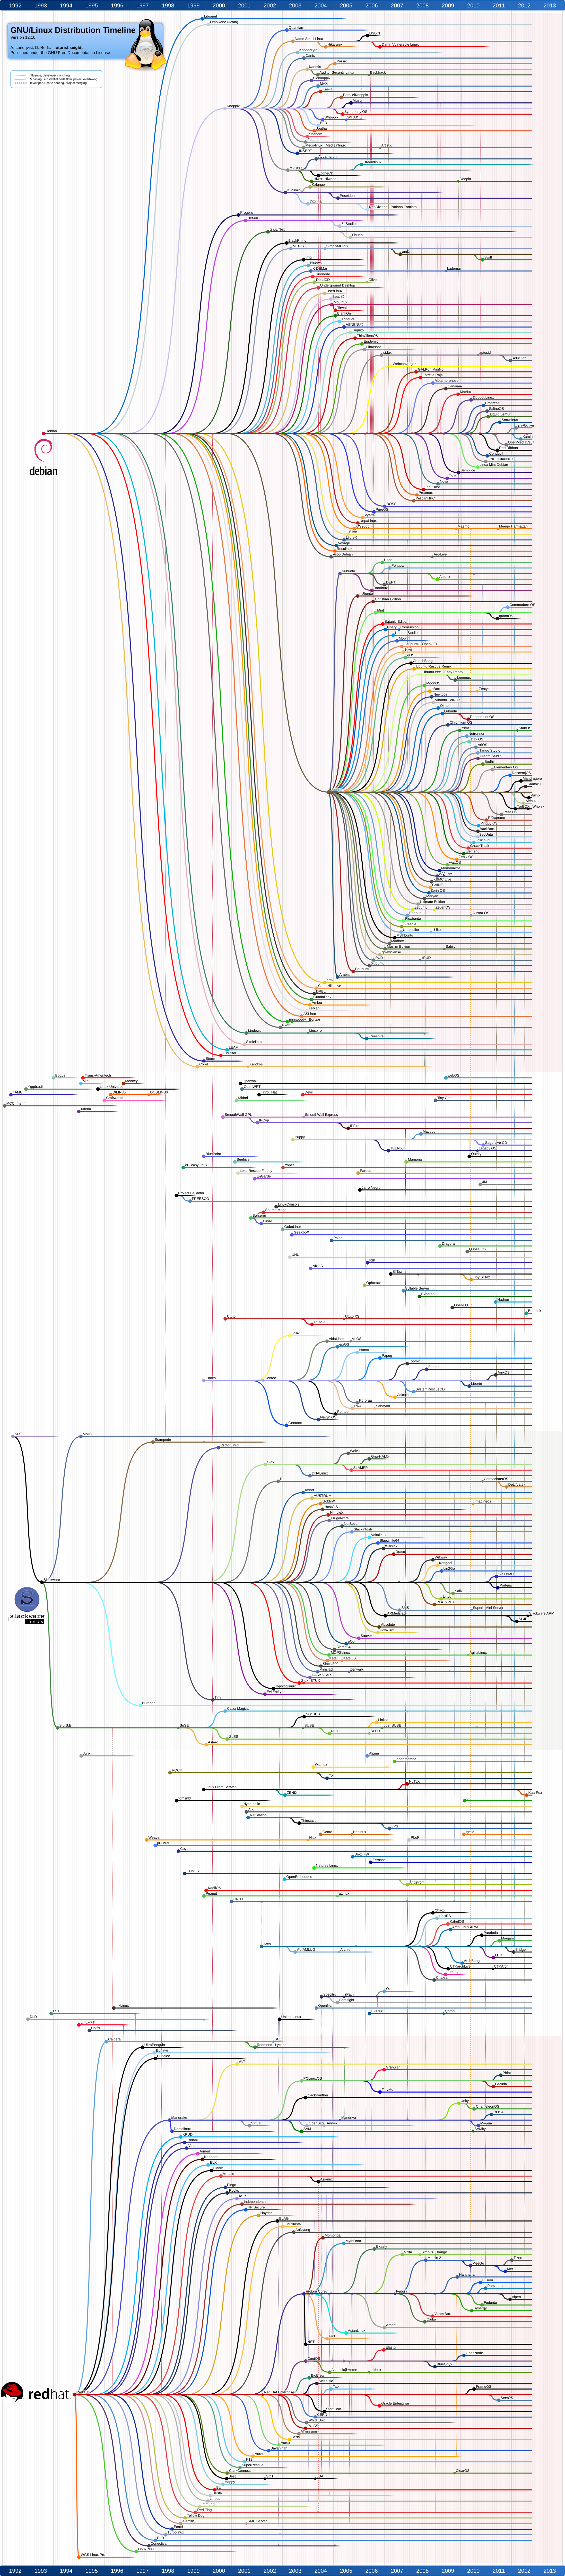 Linux distro timeline